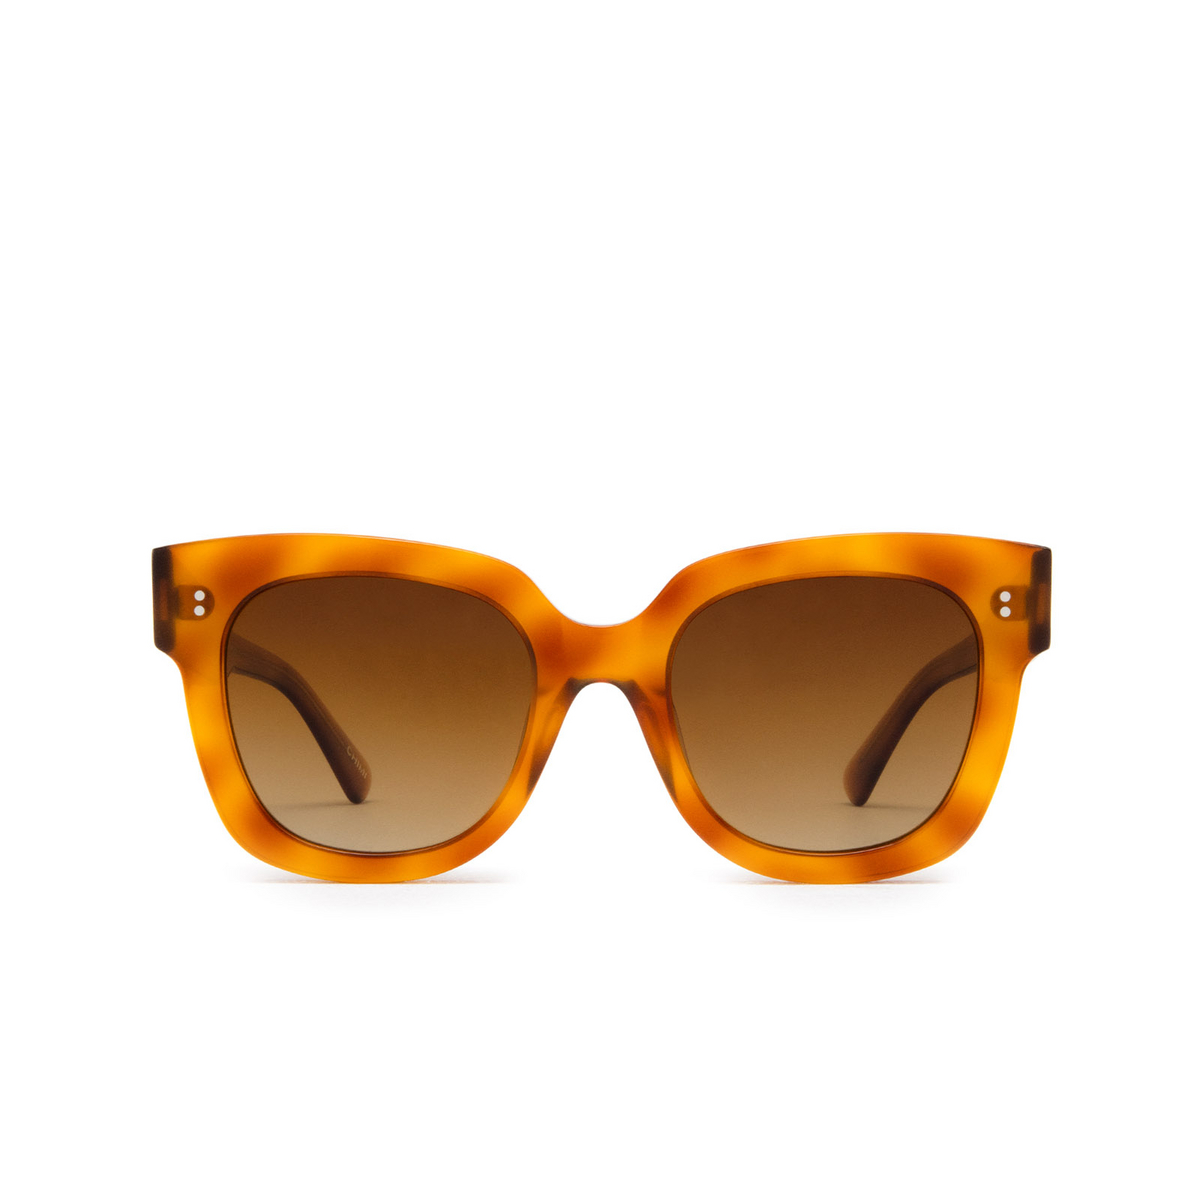 Chimi® Square Sunglasses: 08 color Havana - front view